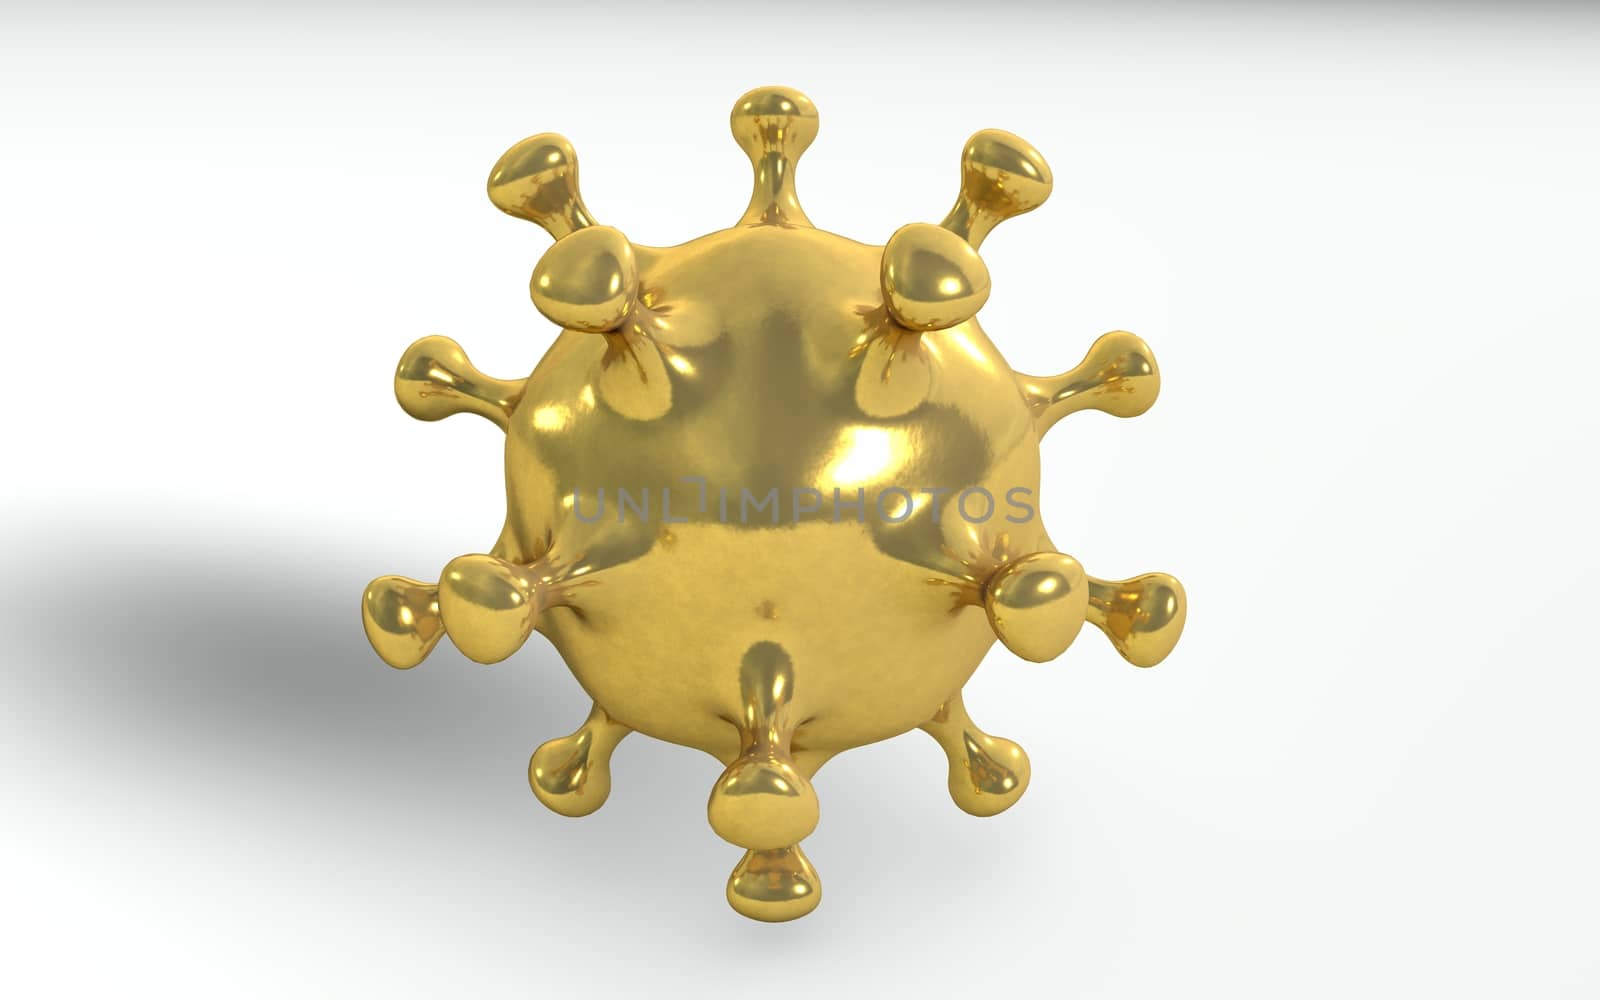 3d rendering of coronavirus made from gold by F1b0nacci